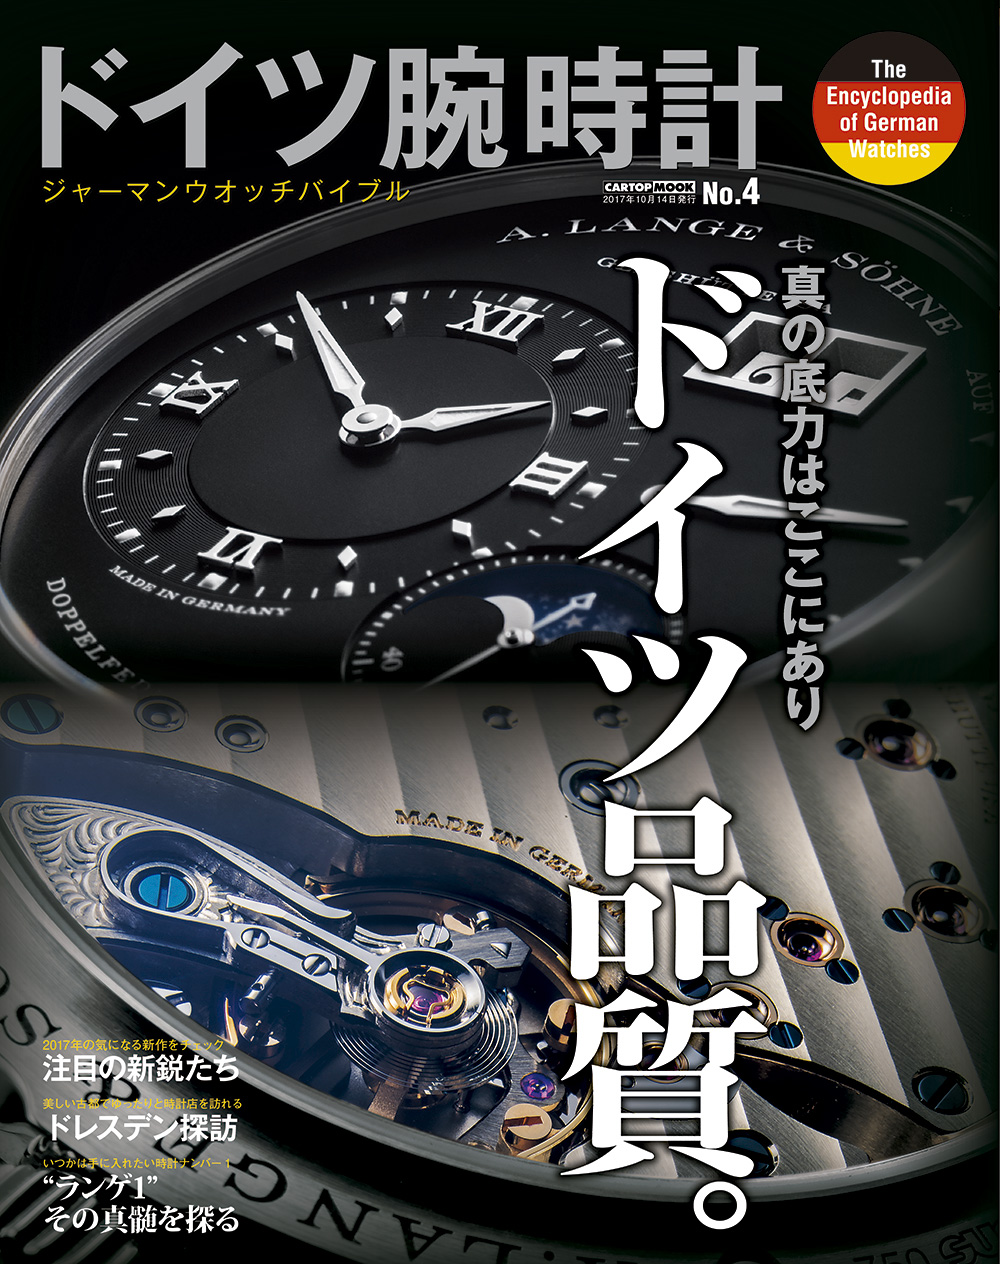 C's-Factory｜電子書籍｜ドイツ腕時計 No.4